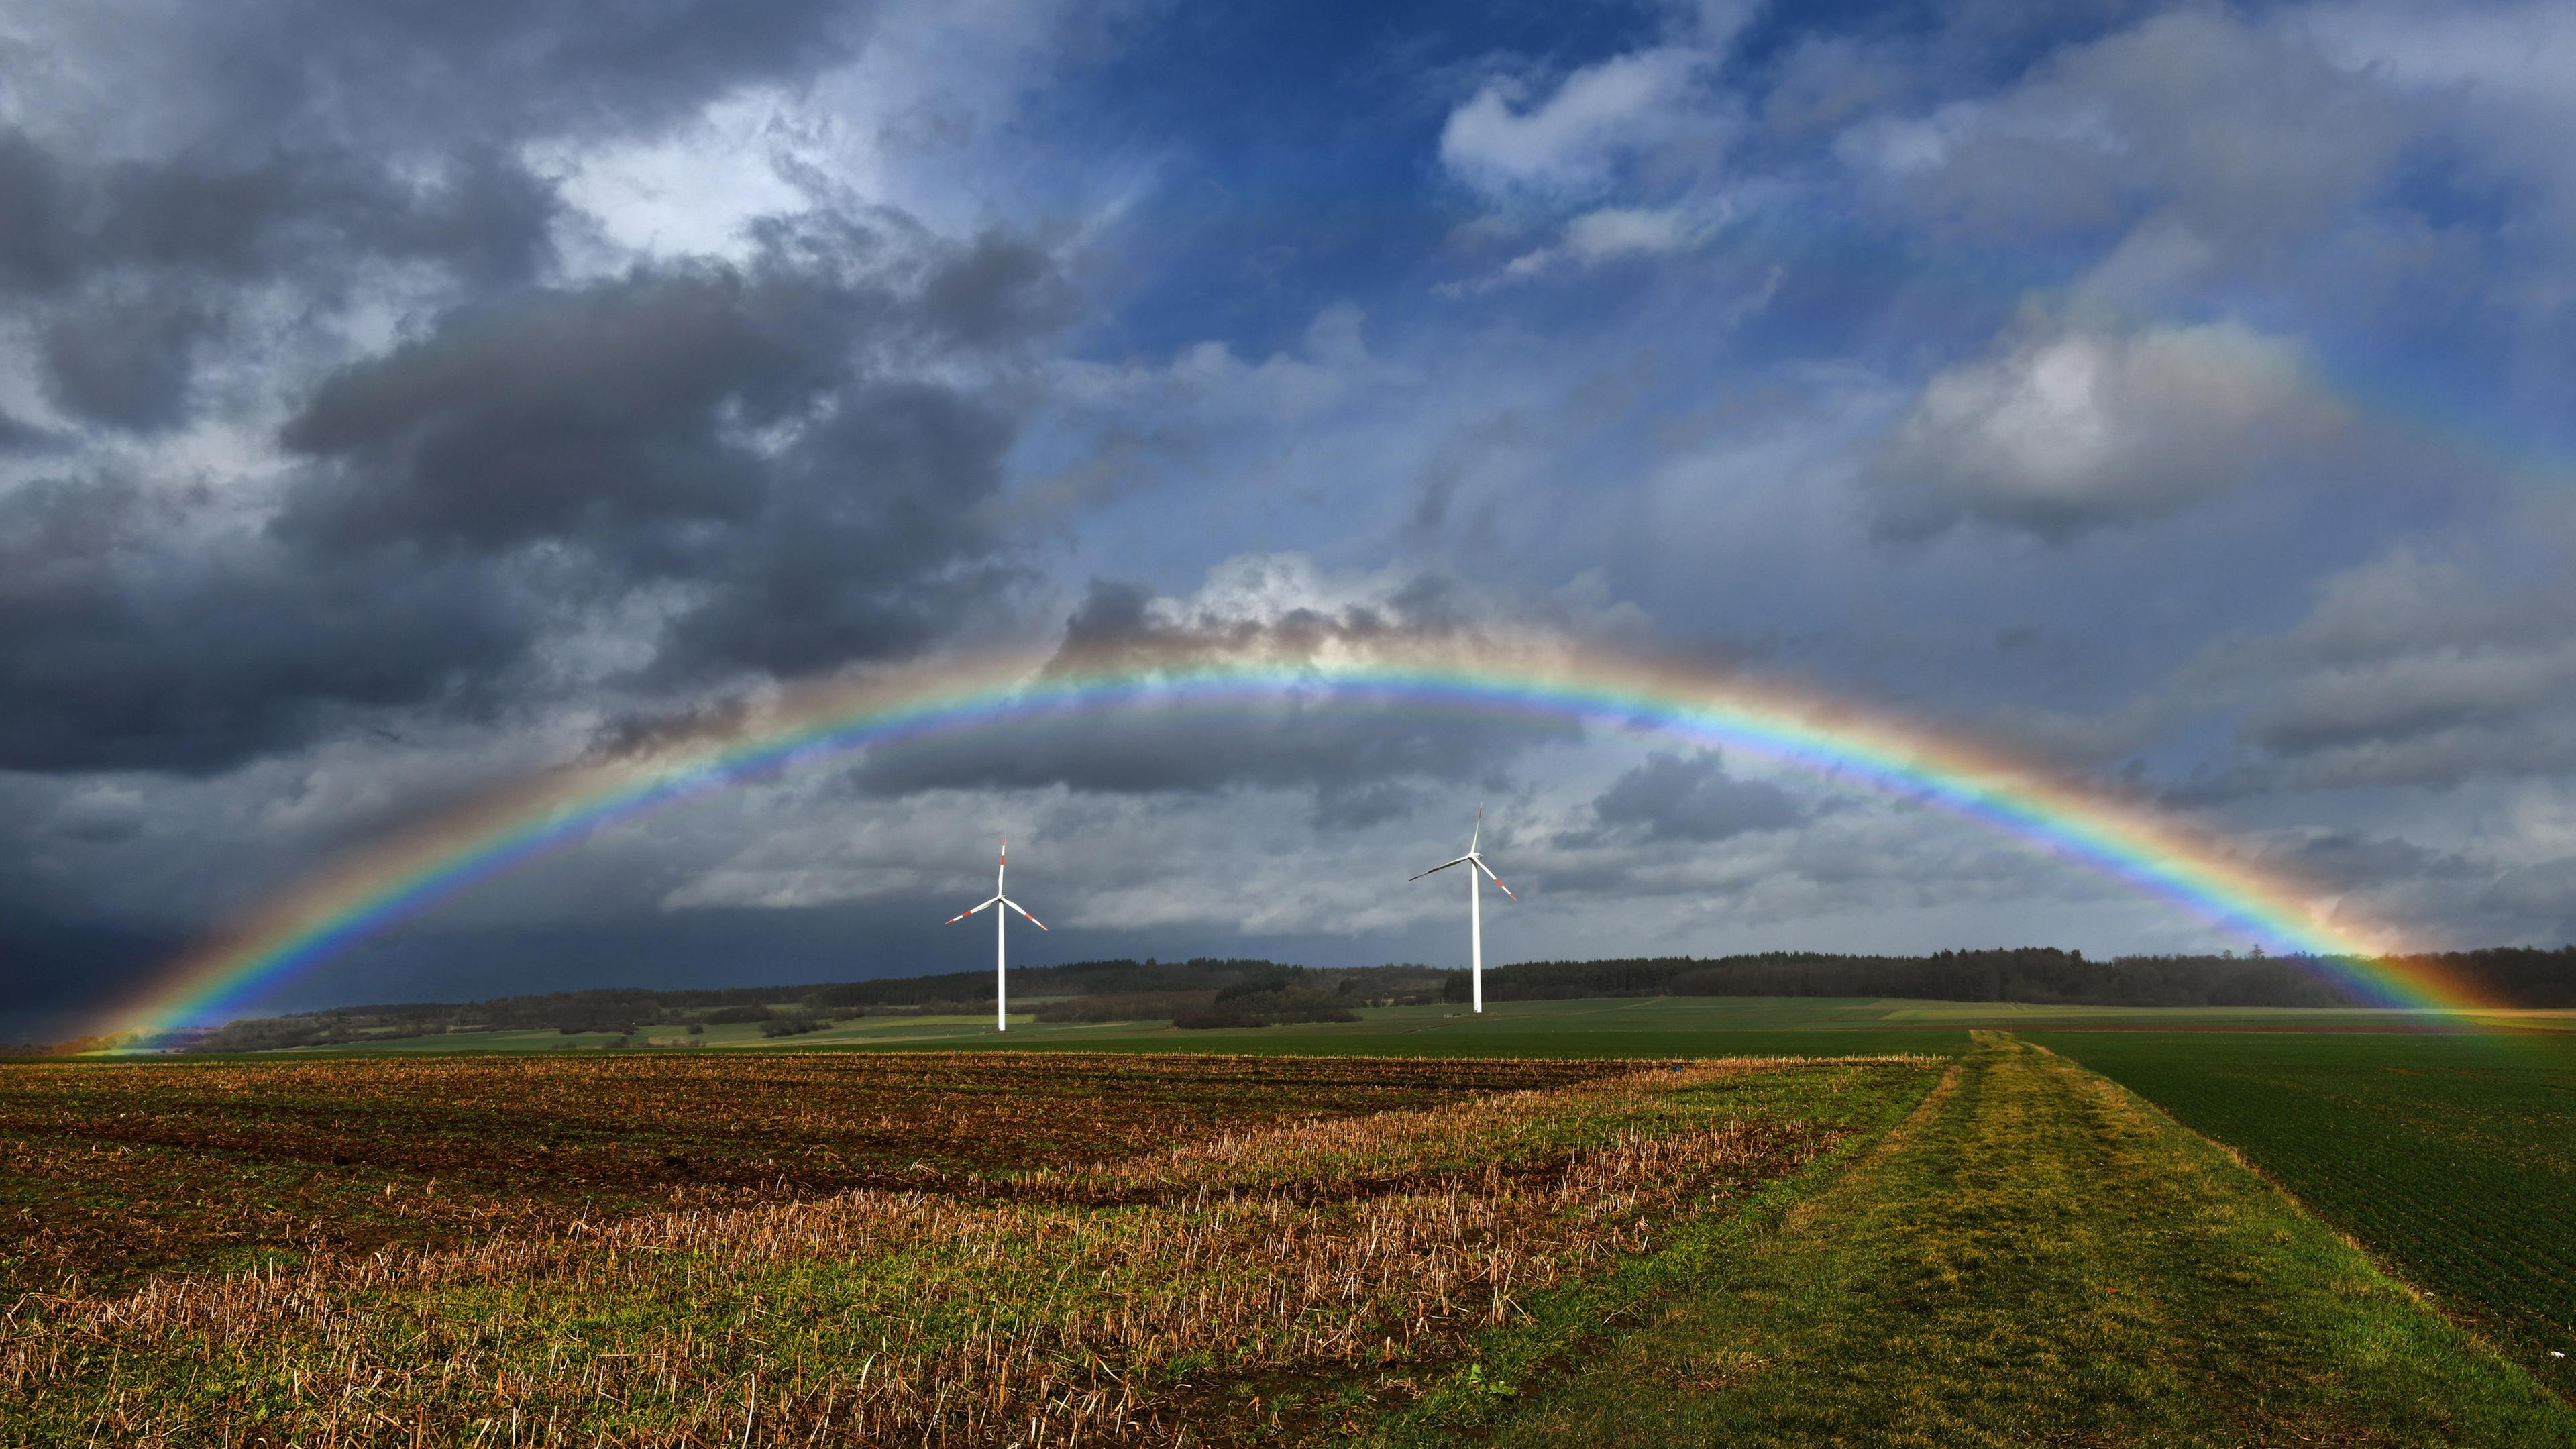 Regenbogen, aufgenommen am 04.03.2019 in Reuters (Hessen)